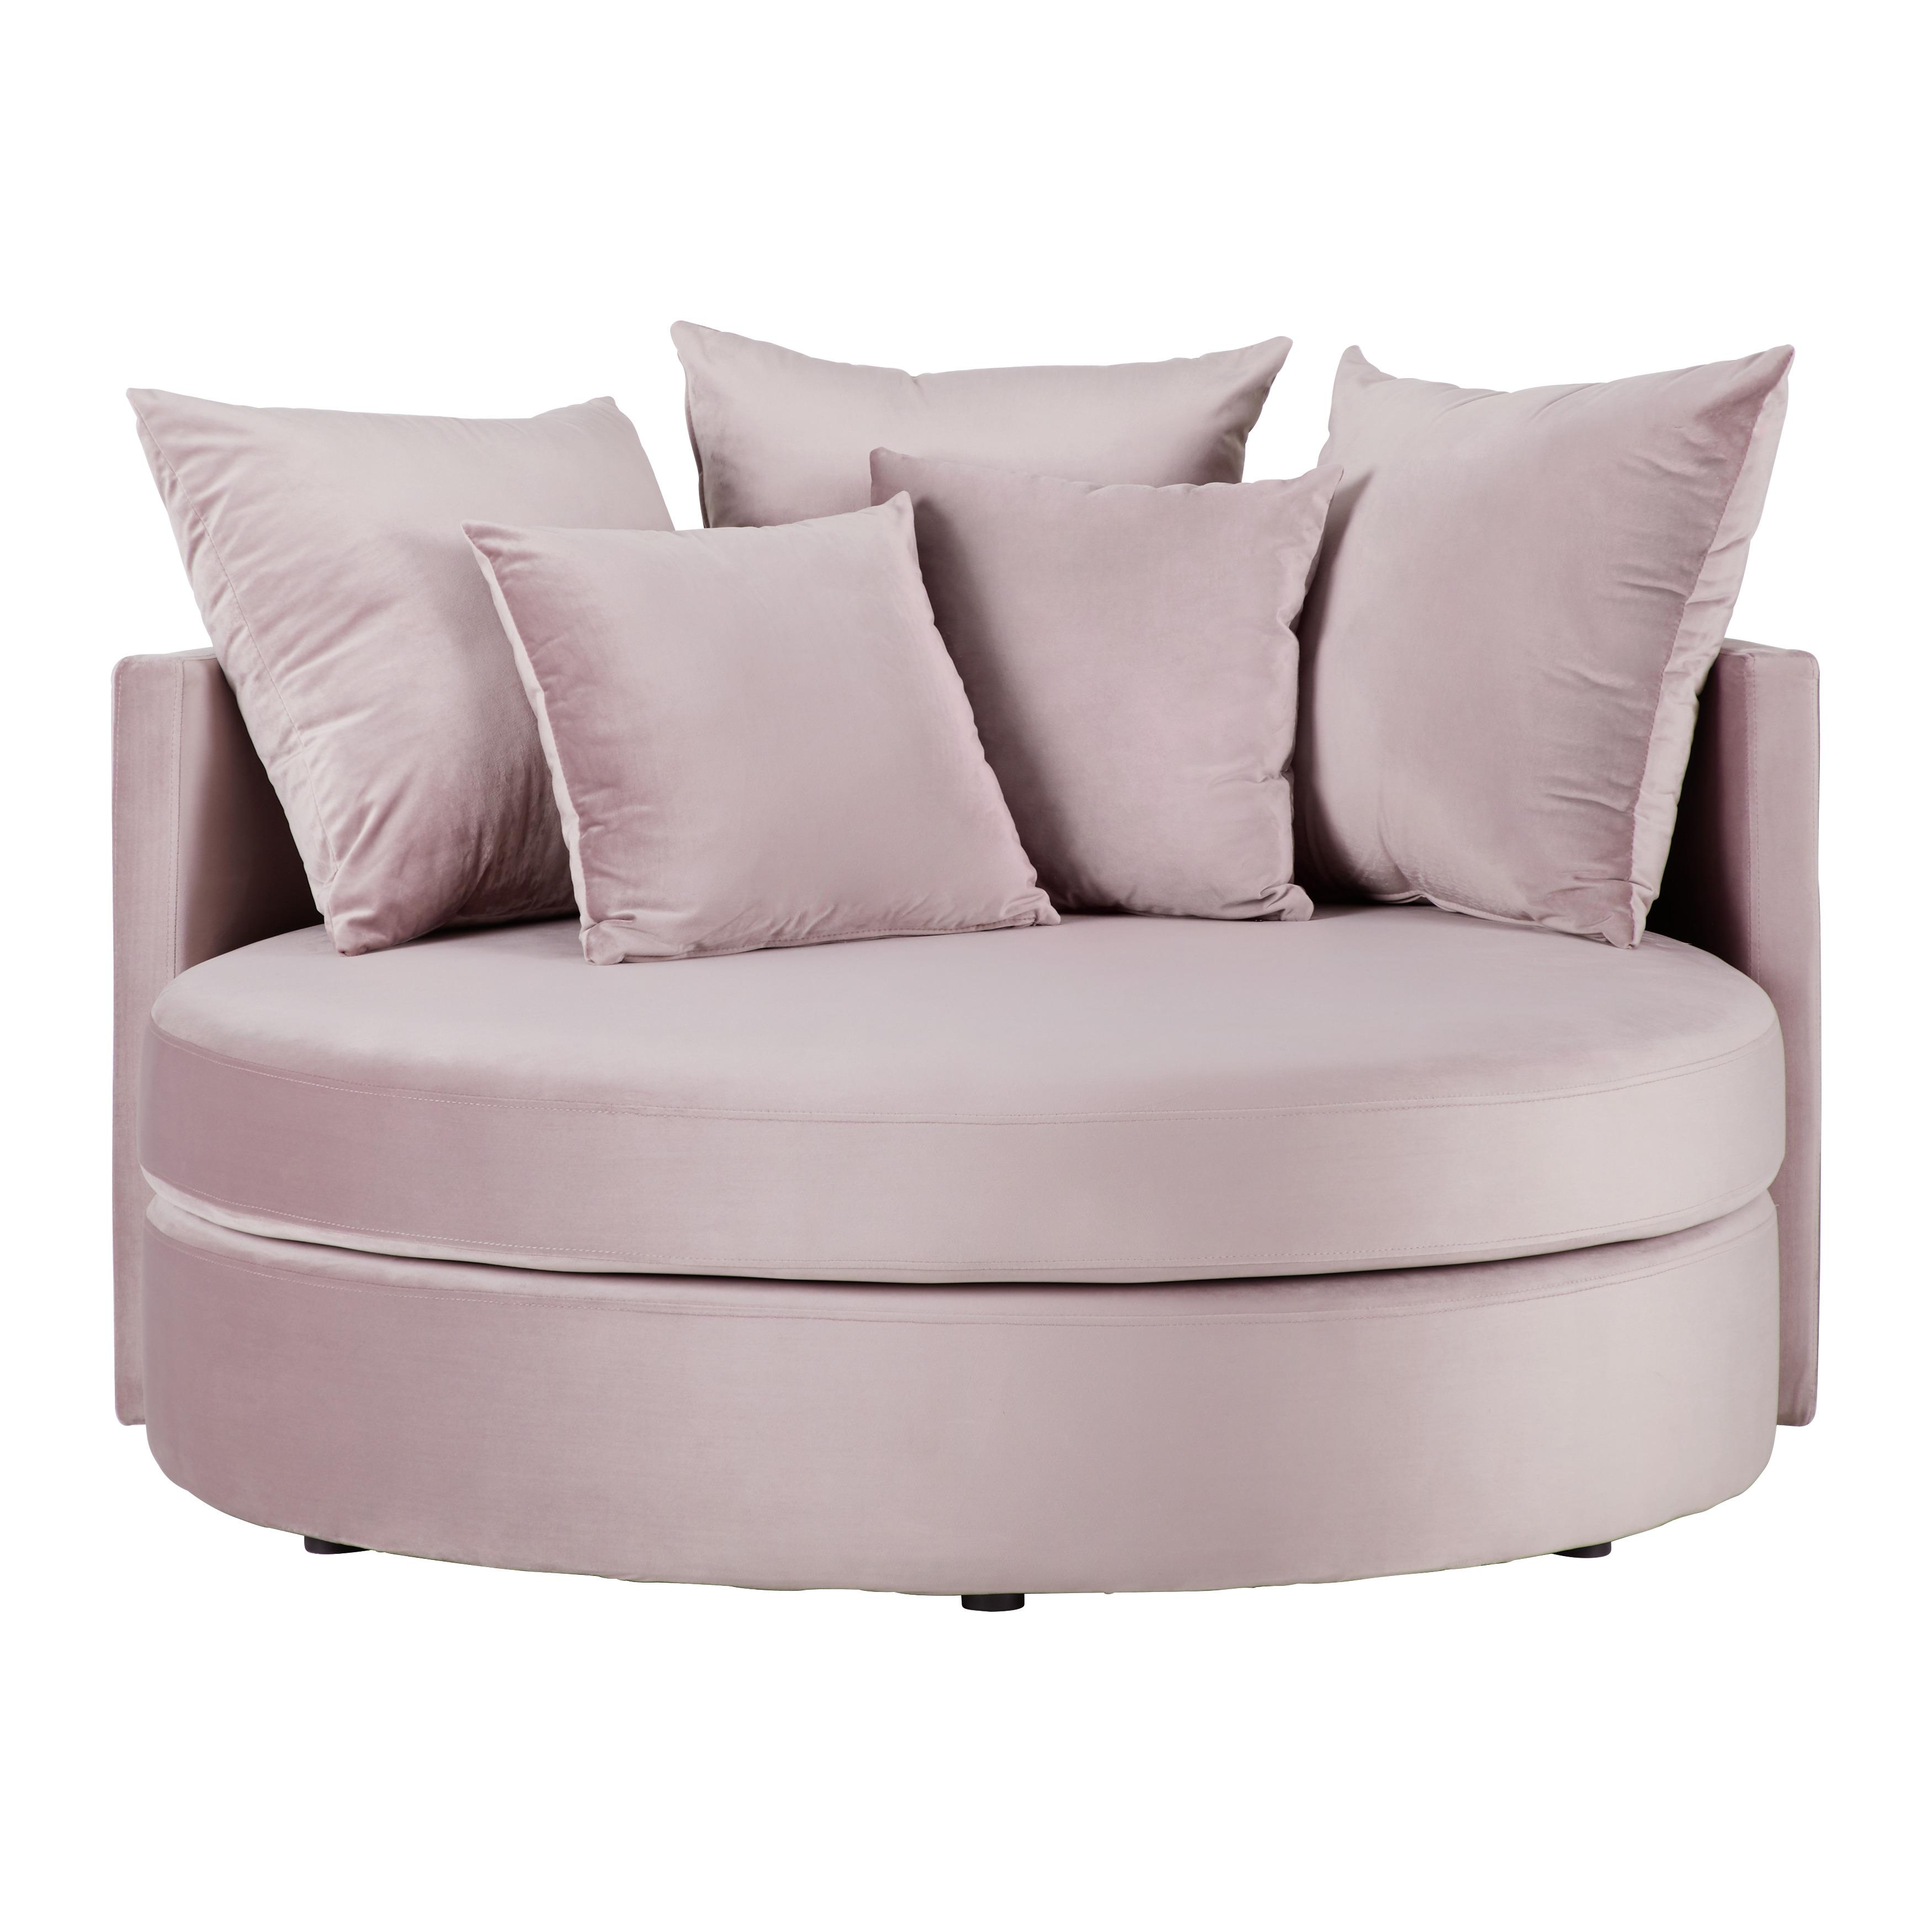 Sofa "Elena" mit 5 Kissen, rosa, Samtbezug - Schwarz/Rosa, MODERN, Holz/Kunststoff (130/65/140cm) - Bessagi Home